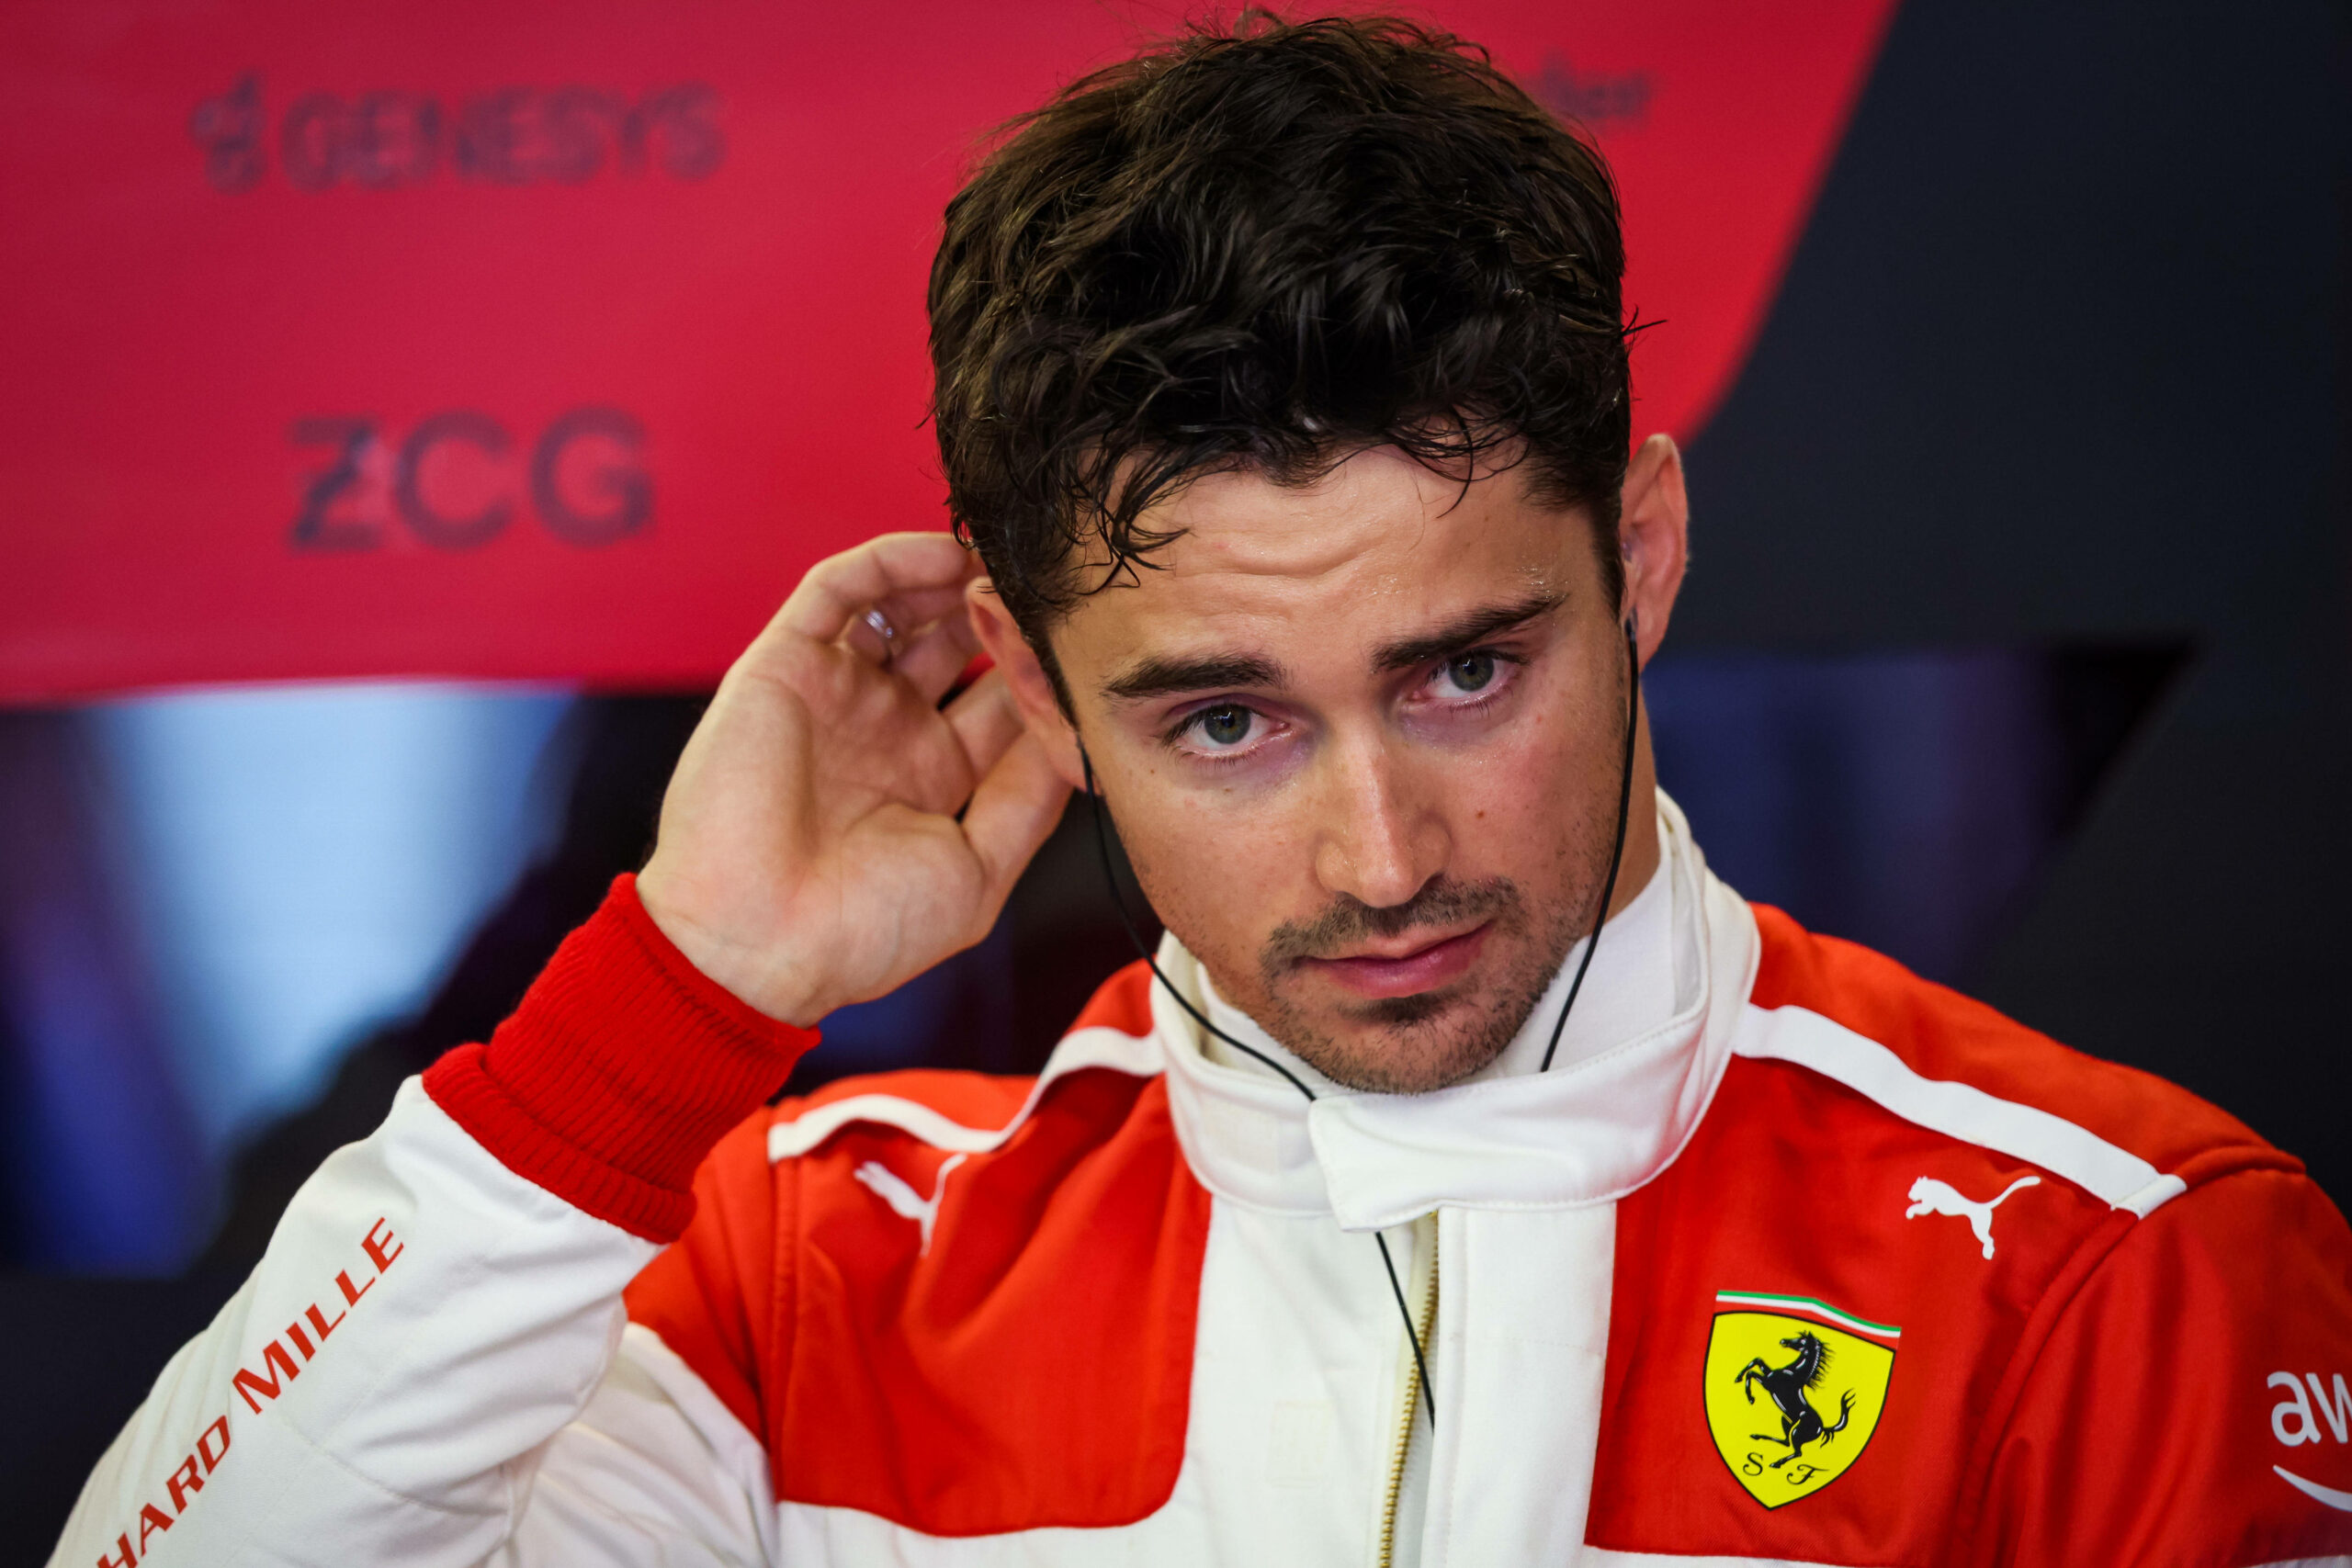 Charles Leclerc im Rennanzug von Ferrari